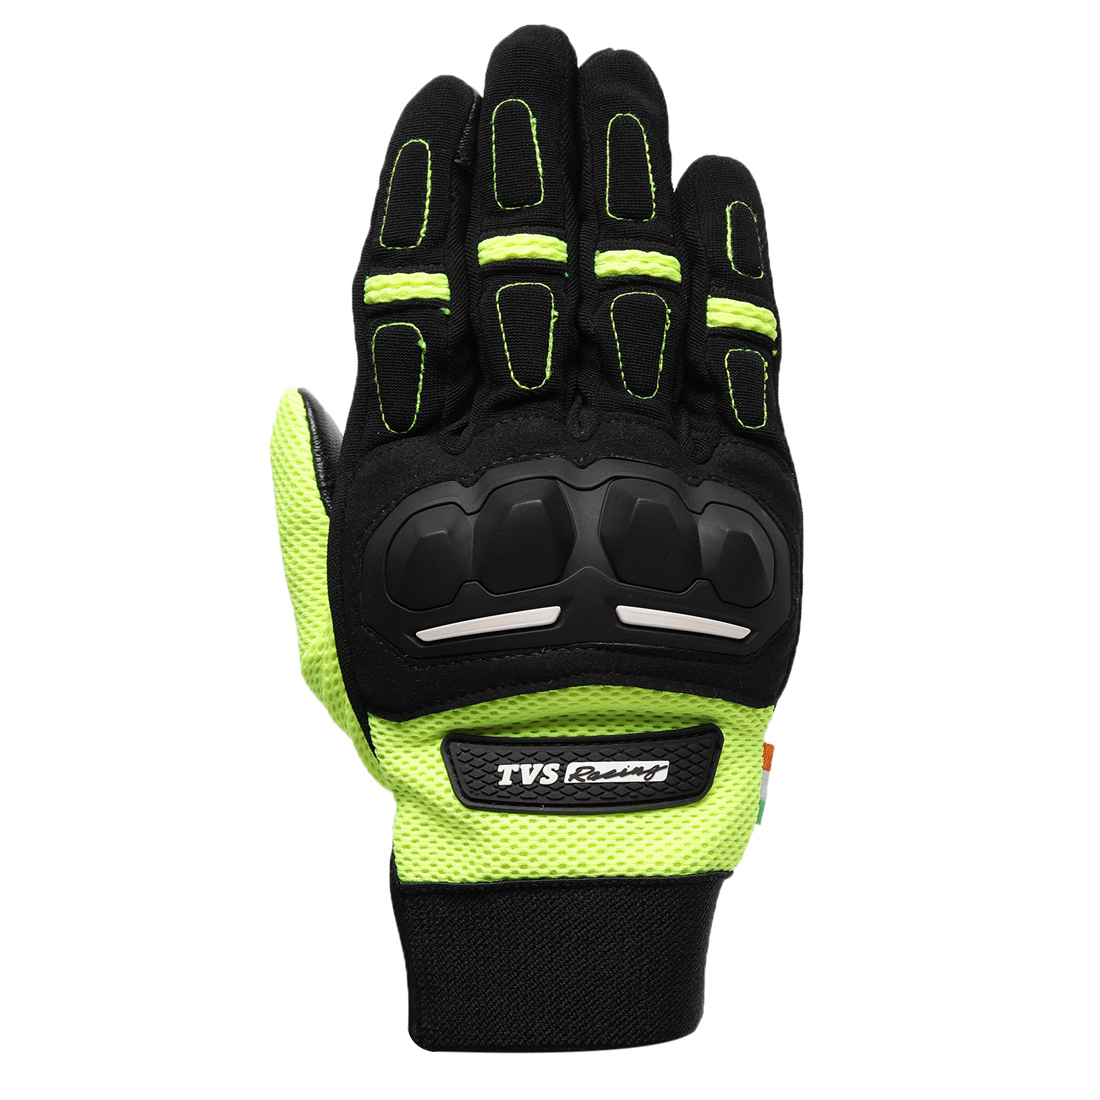 TVS Racing Xplorer Riding Gloves For Men – PVC Carbon Protected